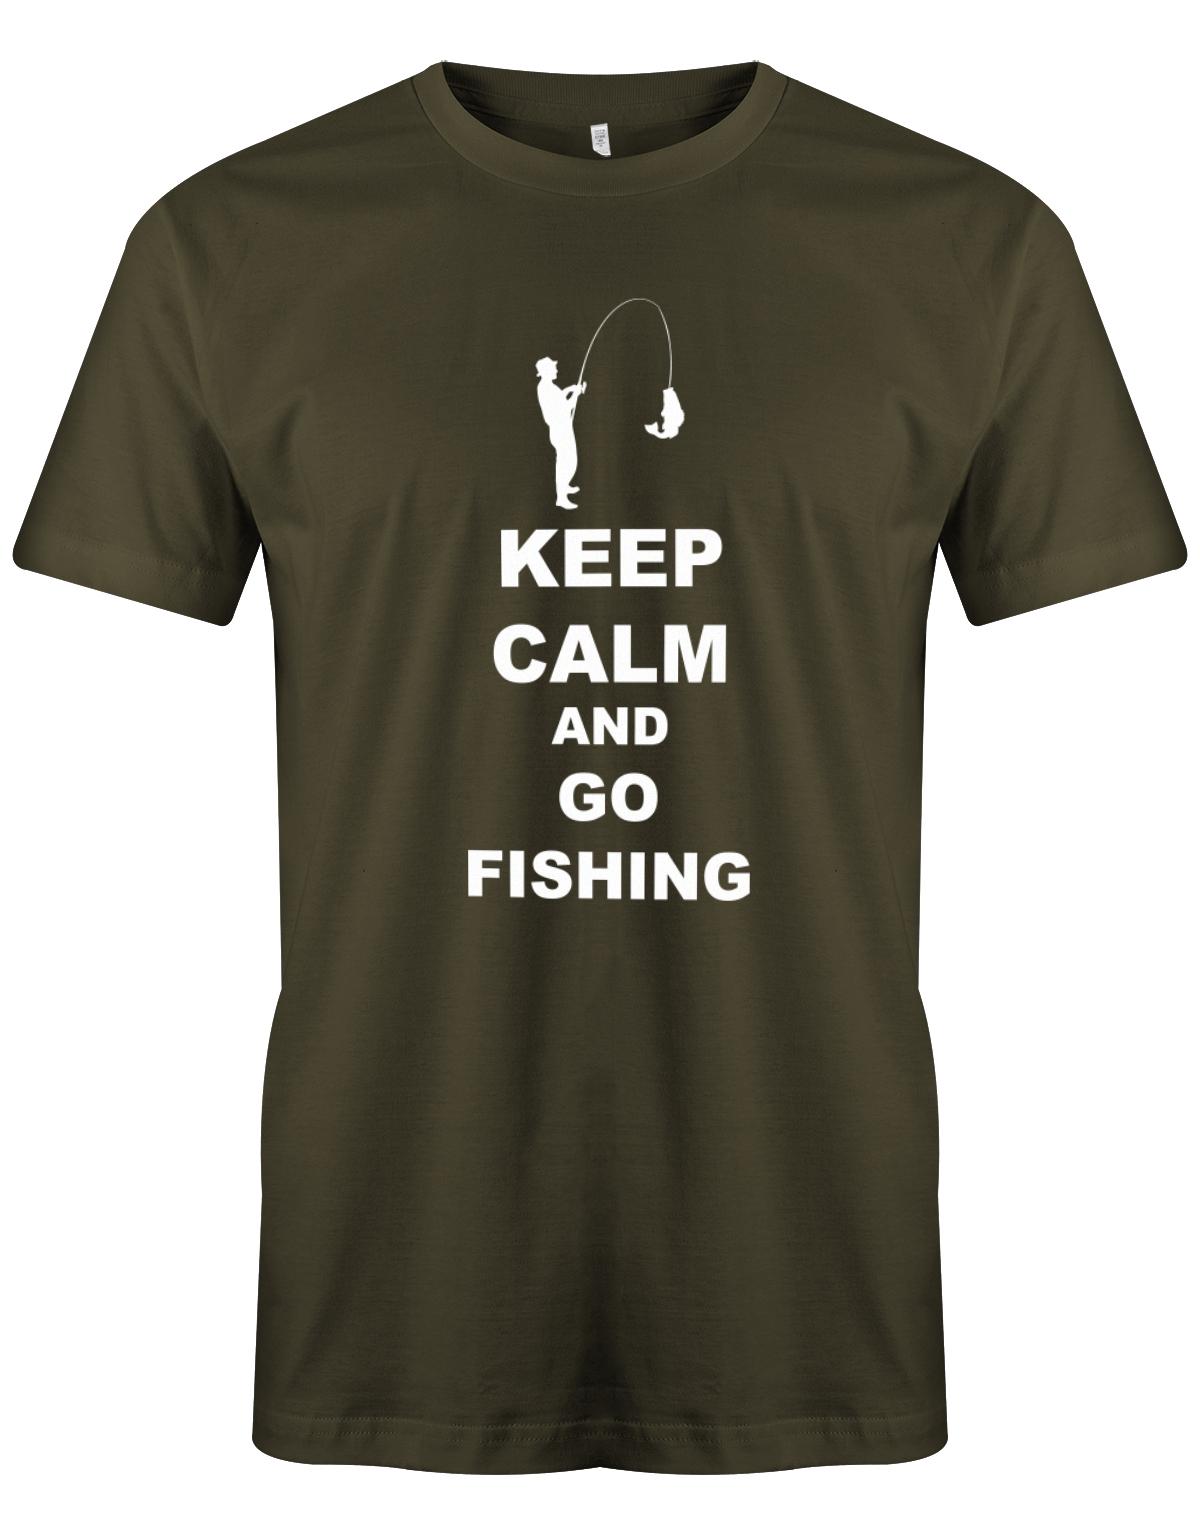 Keep-Calm-and-go-Fishing-herren-Shirt-Army